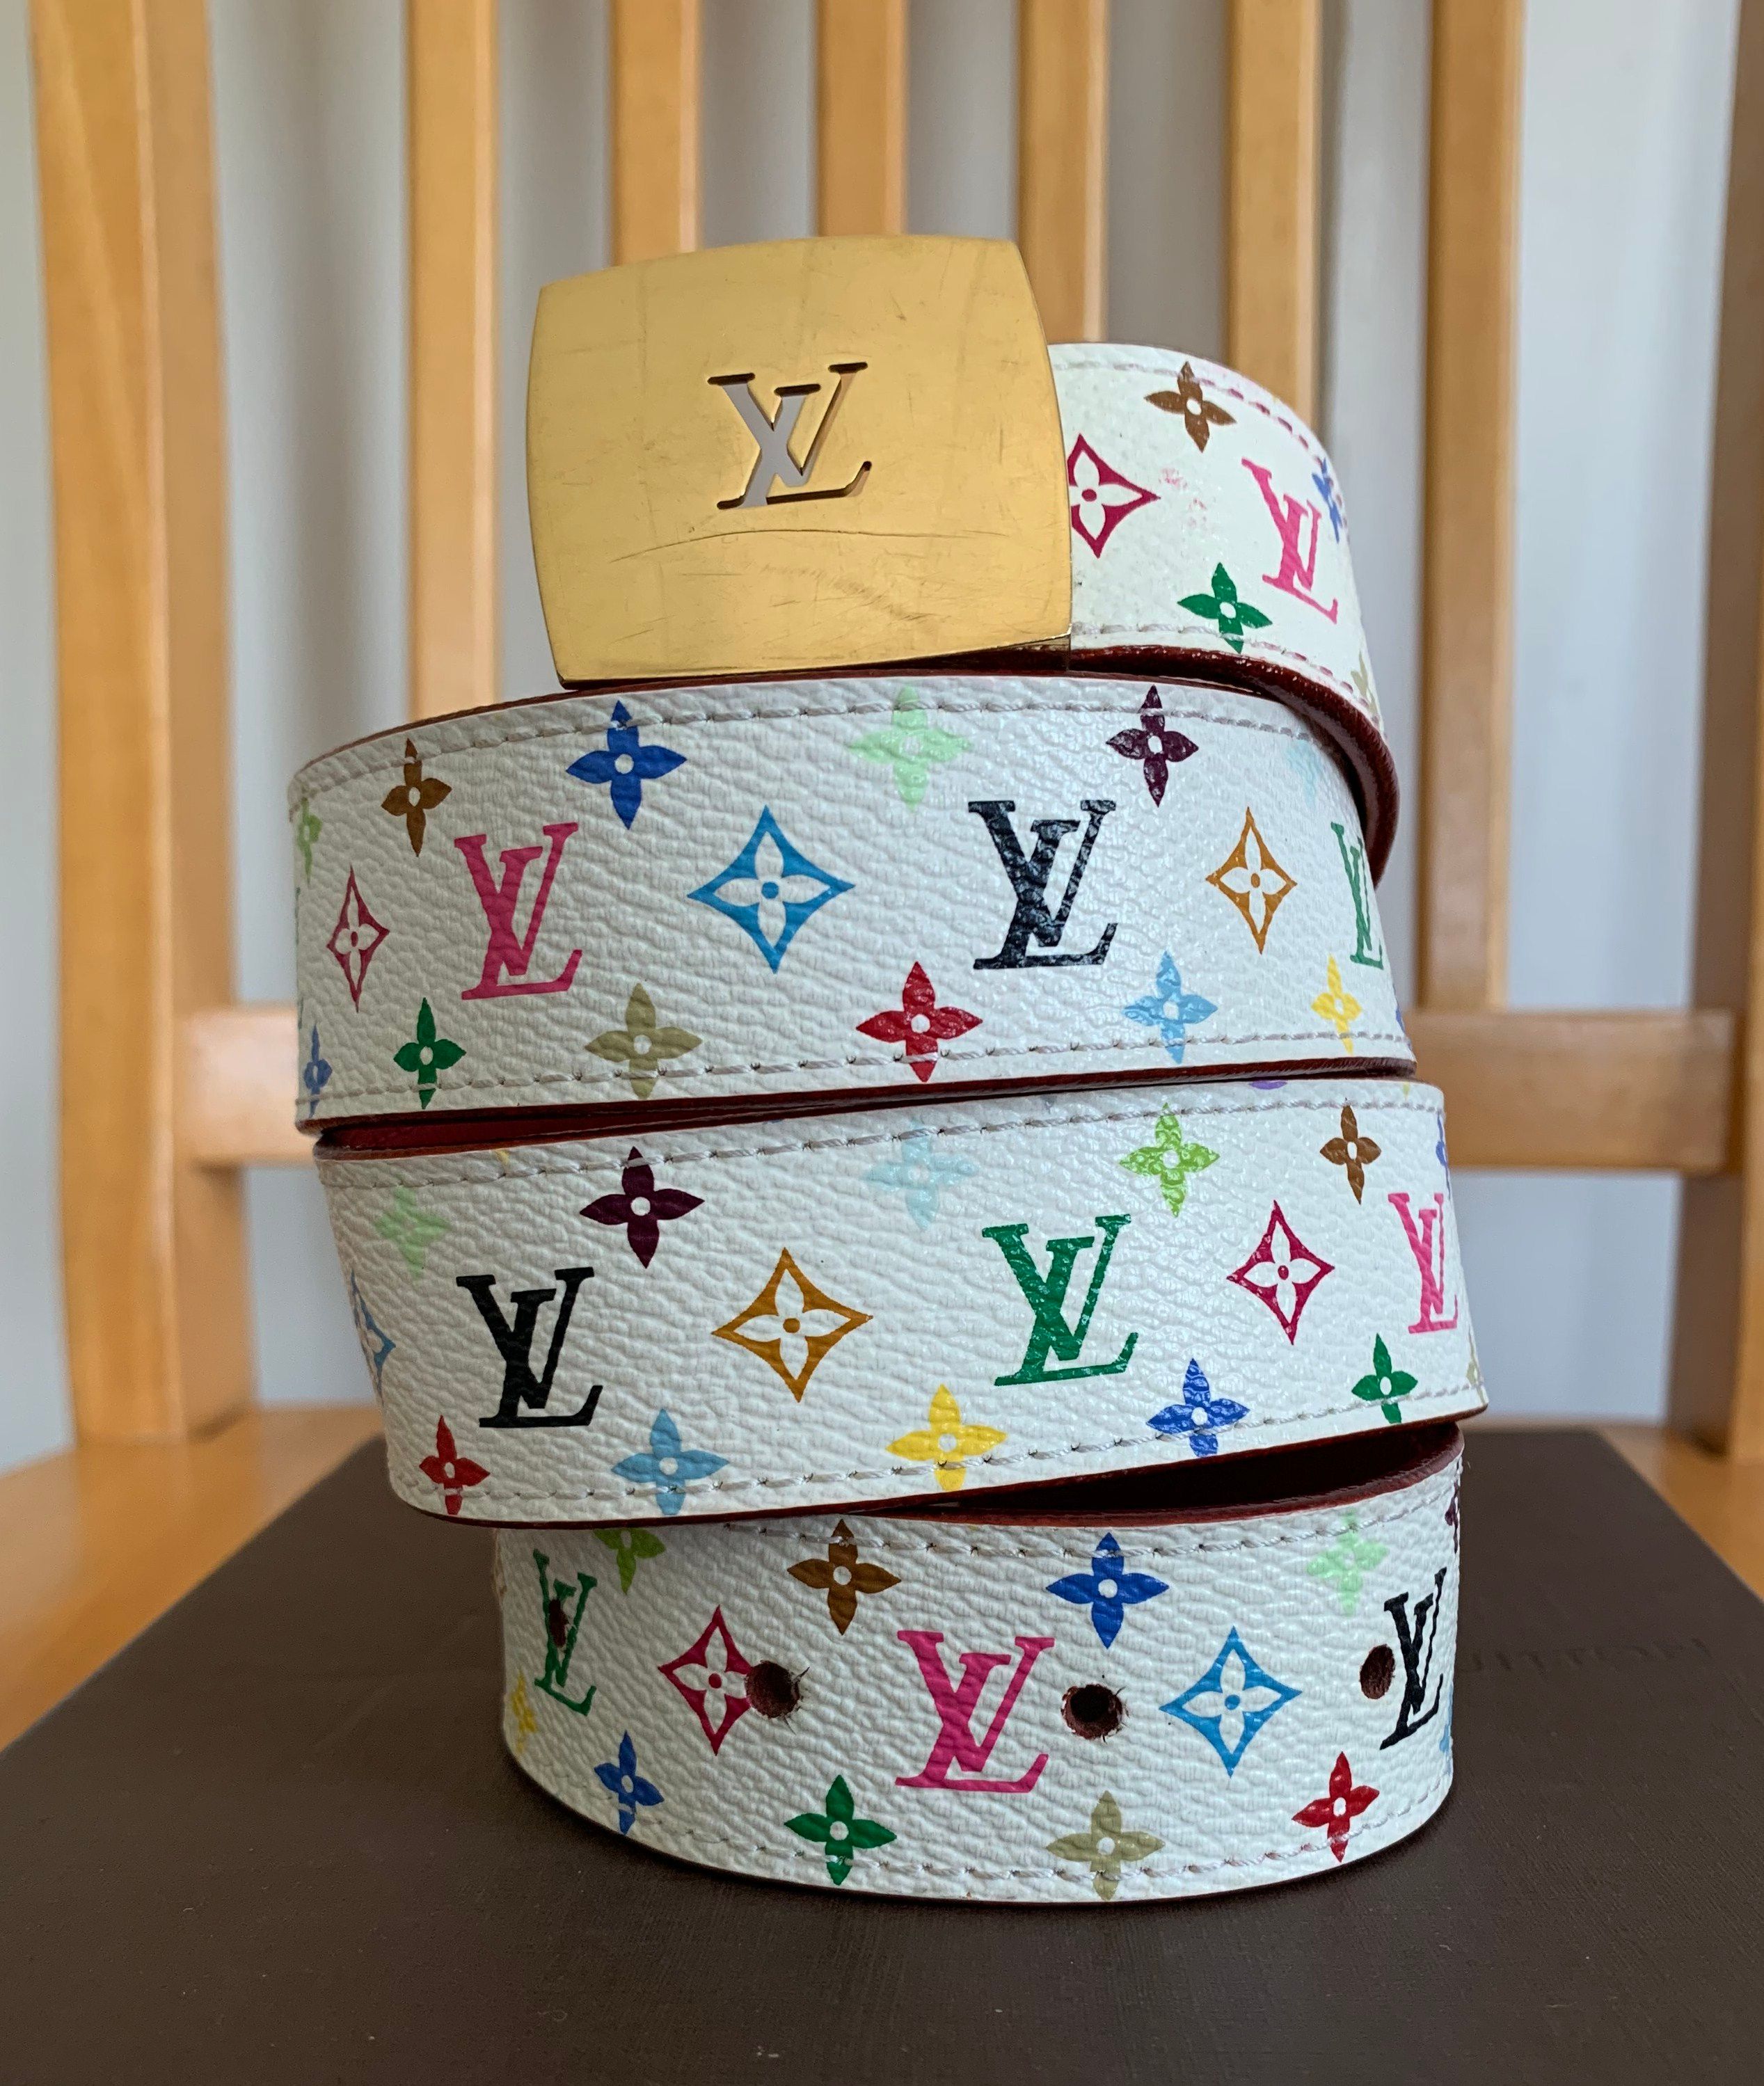 S/S 2003 Louis Vuitton x Takashi Murakami Multicolor Monogram Belt + Box